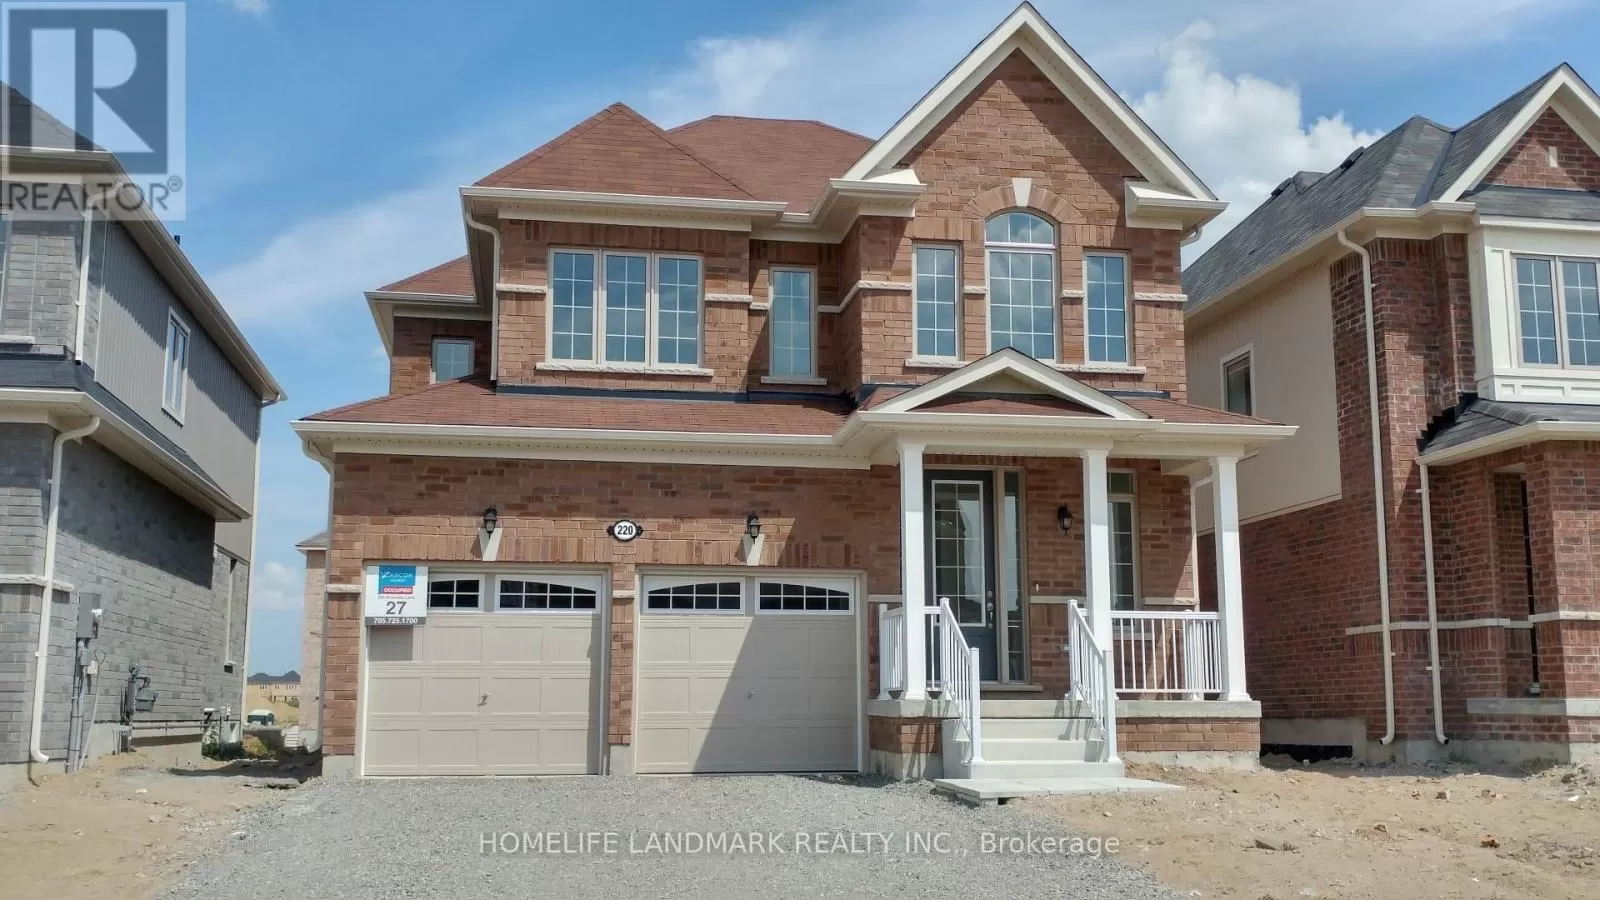 House for rent: 220 Brownley Lane, Essa, Ontario L0M 1B6